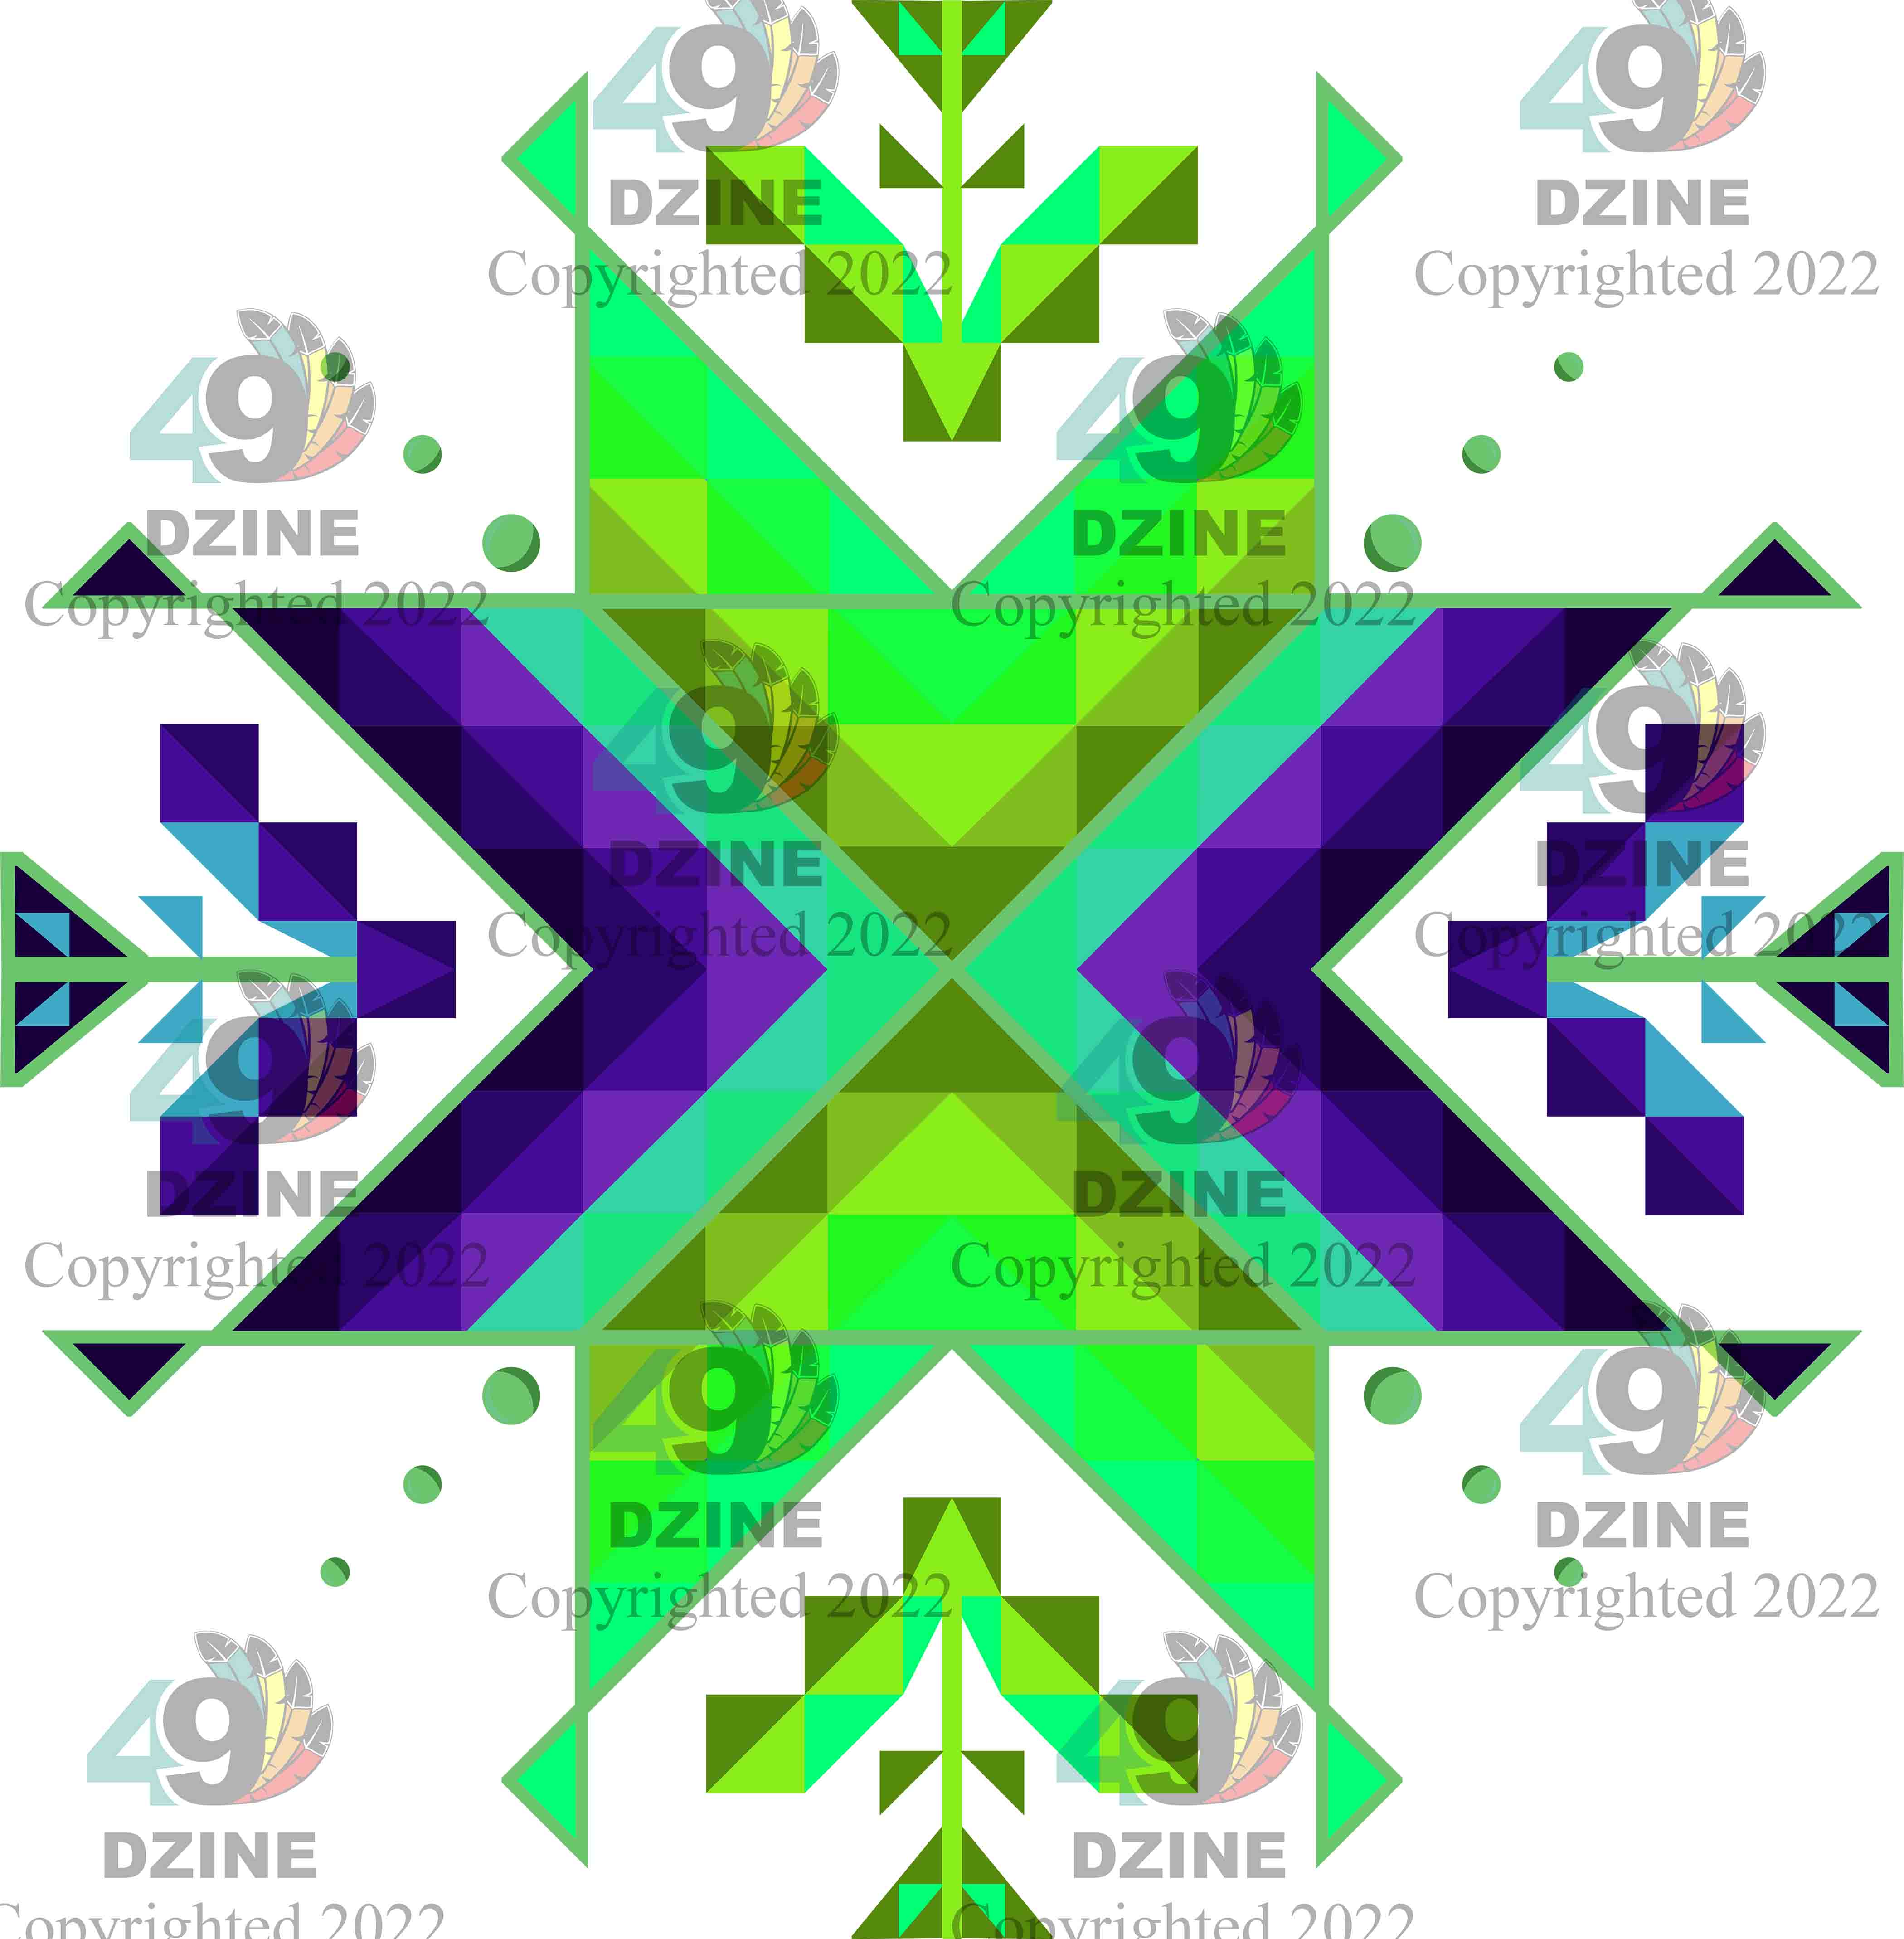 6-inch Geometric Transfer Dream of the Ancestors Transfers 49 Dzine Dream of the Ancestors Spring Green 